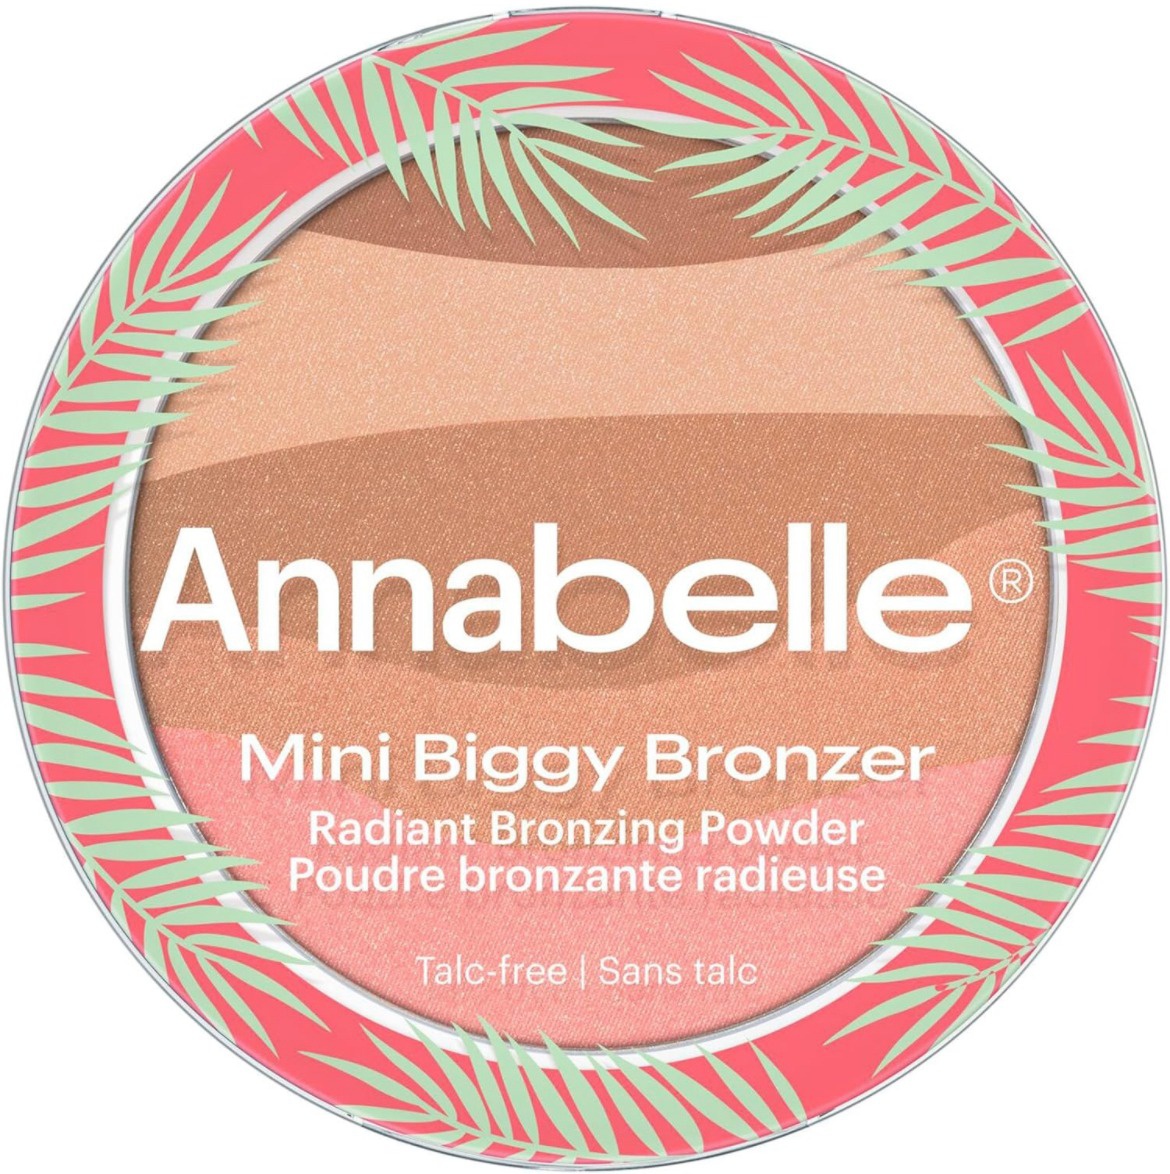 Annabelle Mini Biggy Bronzer